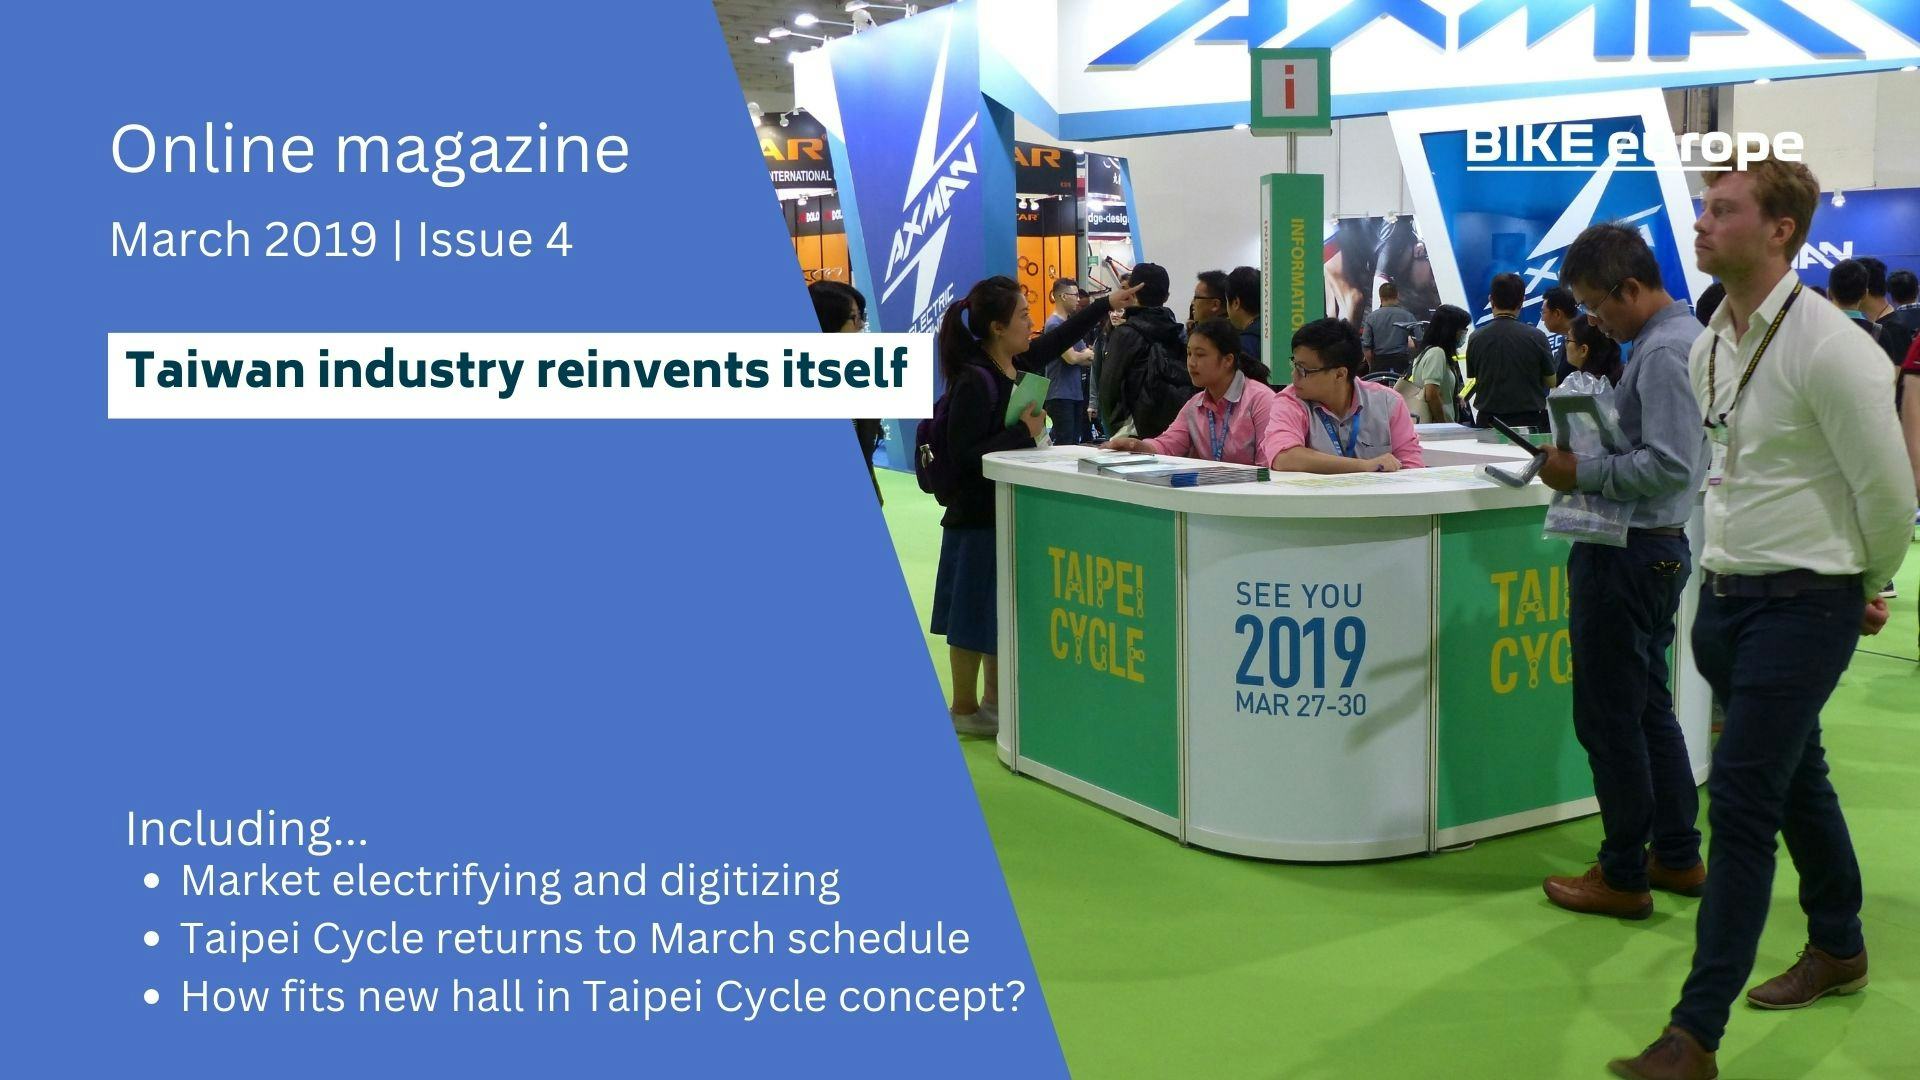 Online magazine: Taiwan industry reinvents itself